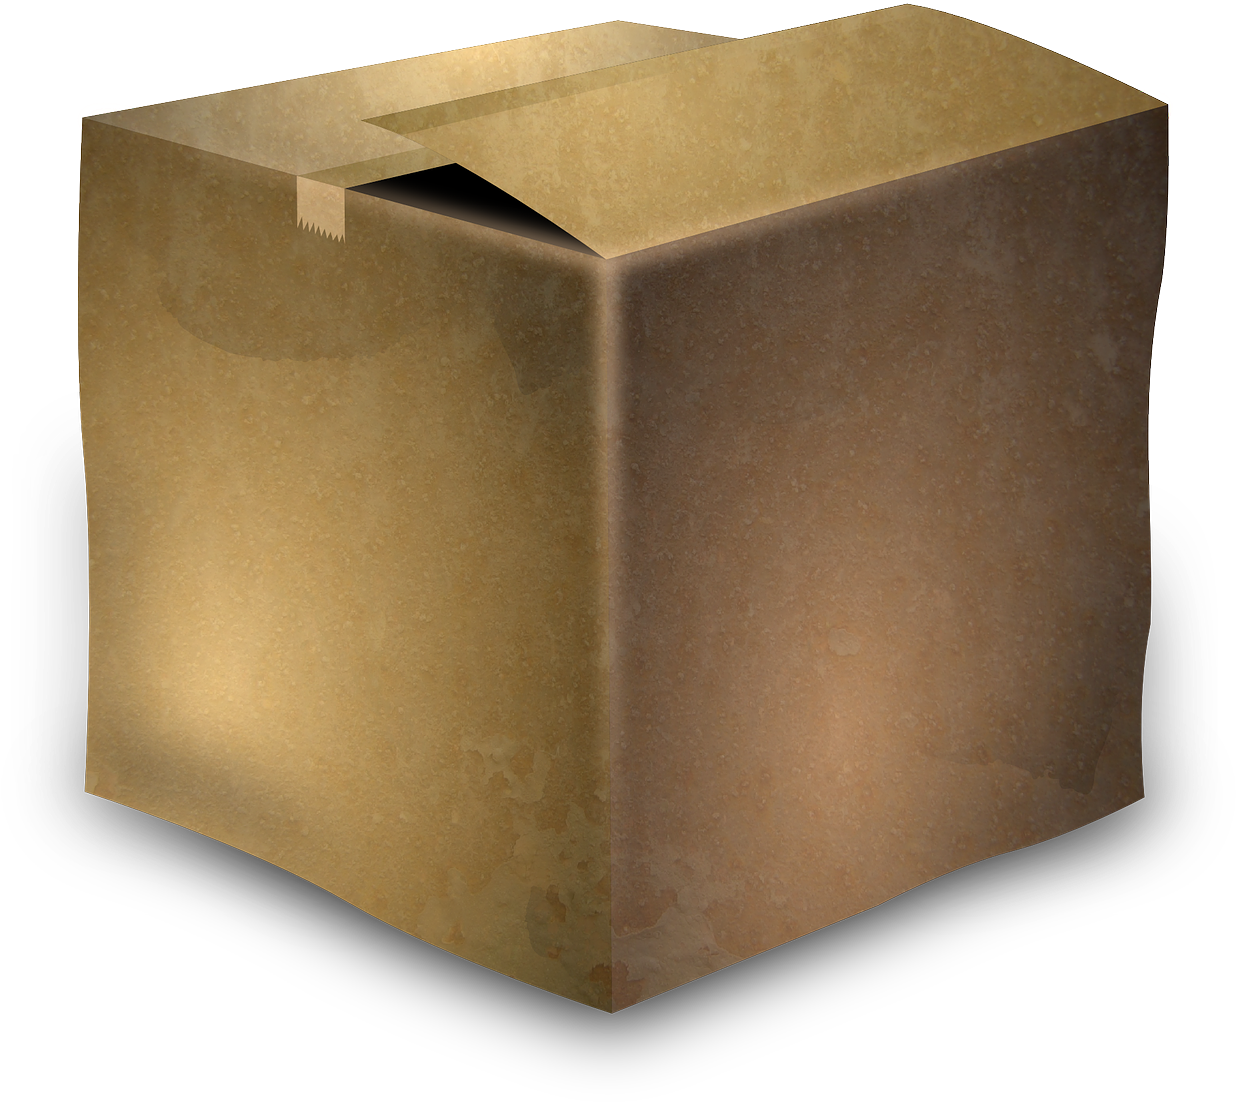 Cardboard Box Closed Top View PNG image